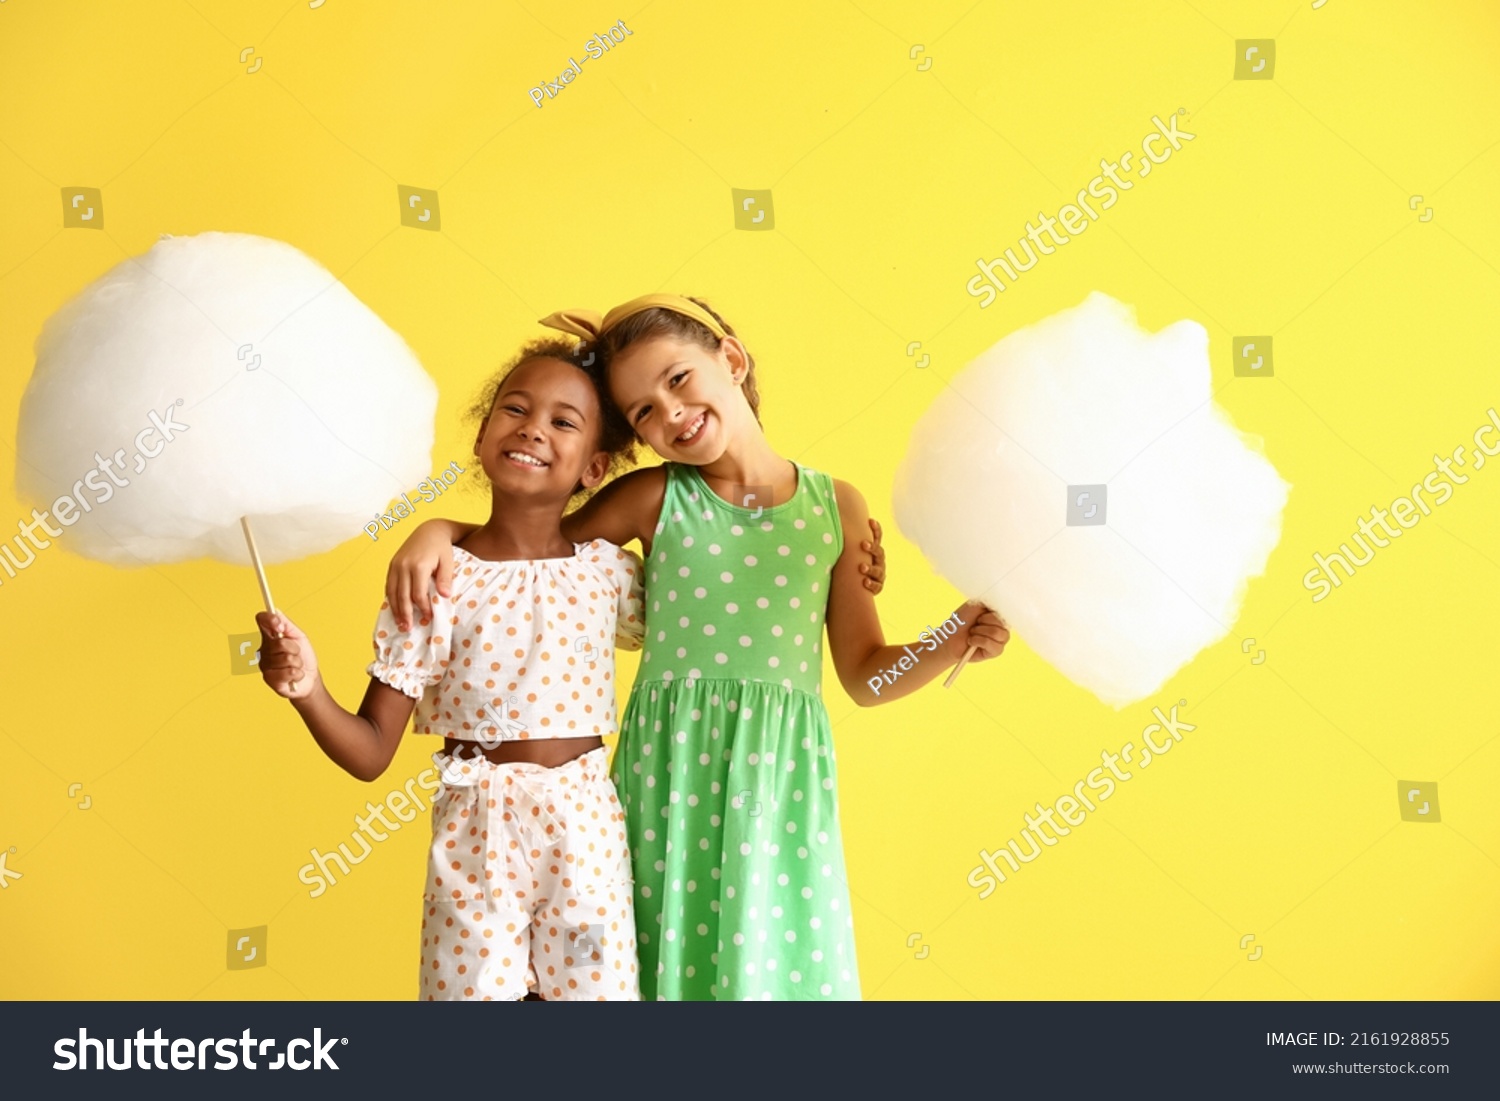 Cute Little Girls Cotton Candy On Stock Photo 2161928855 | Shutterstock